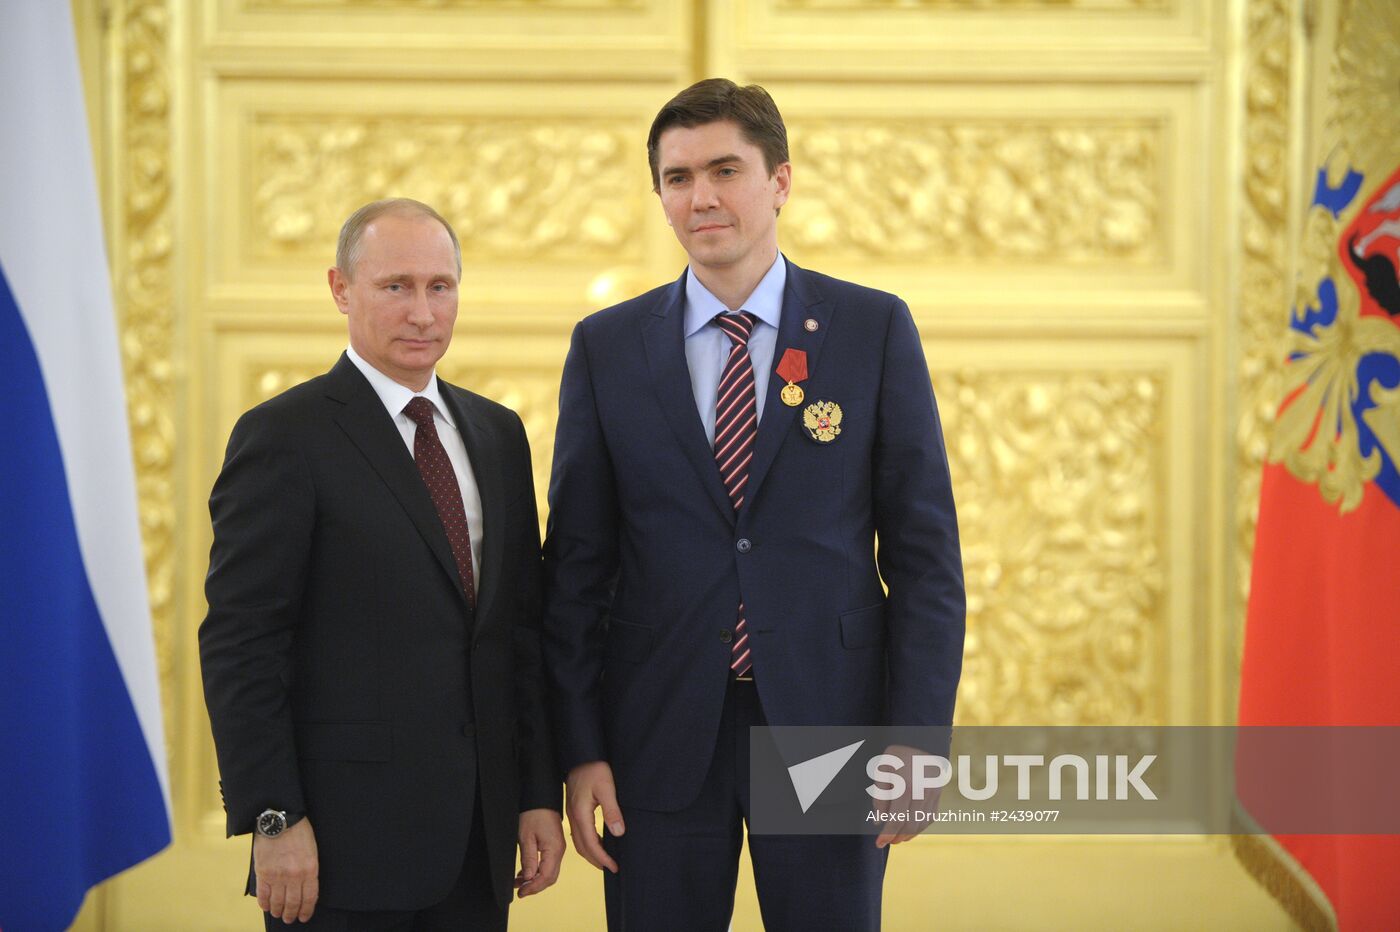 Kremlin award ceremony on Russian ice hockey team's win